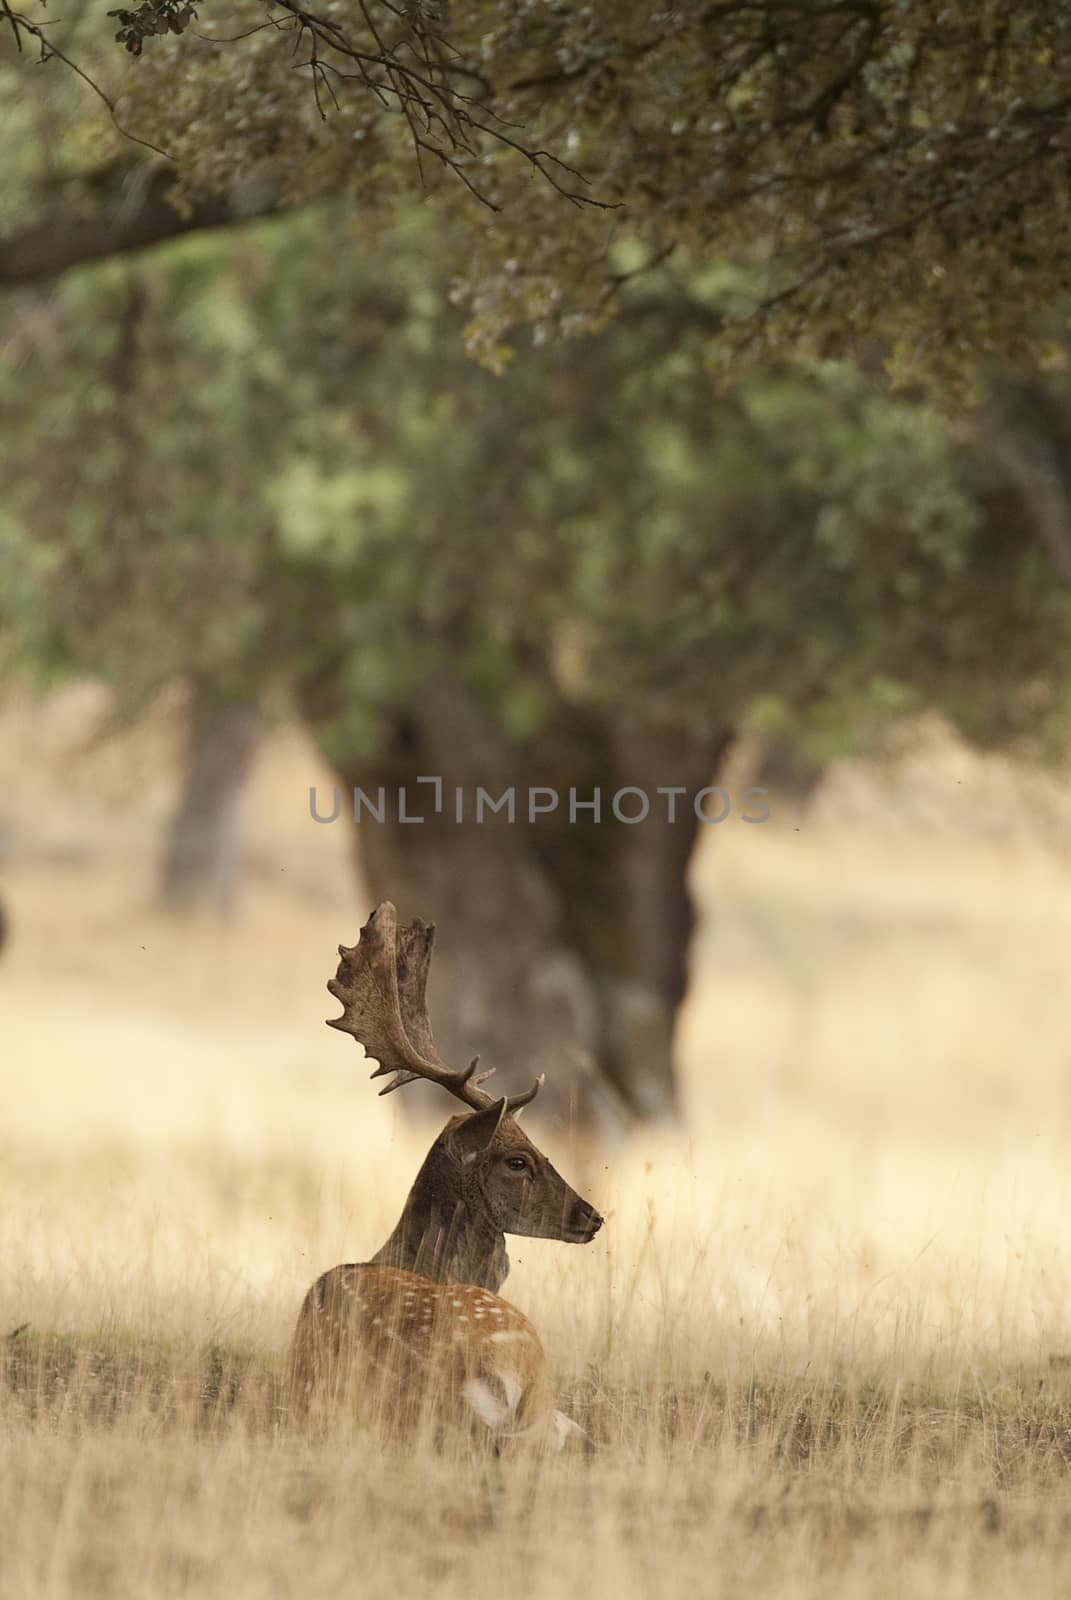 Fallow Deers, Dama dama, Spain by jalonsohu@gmail.com